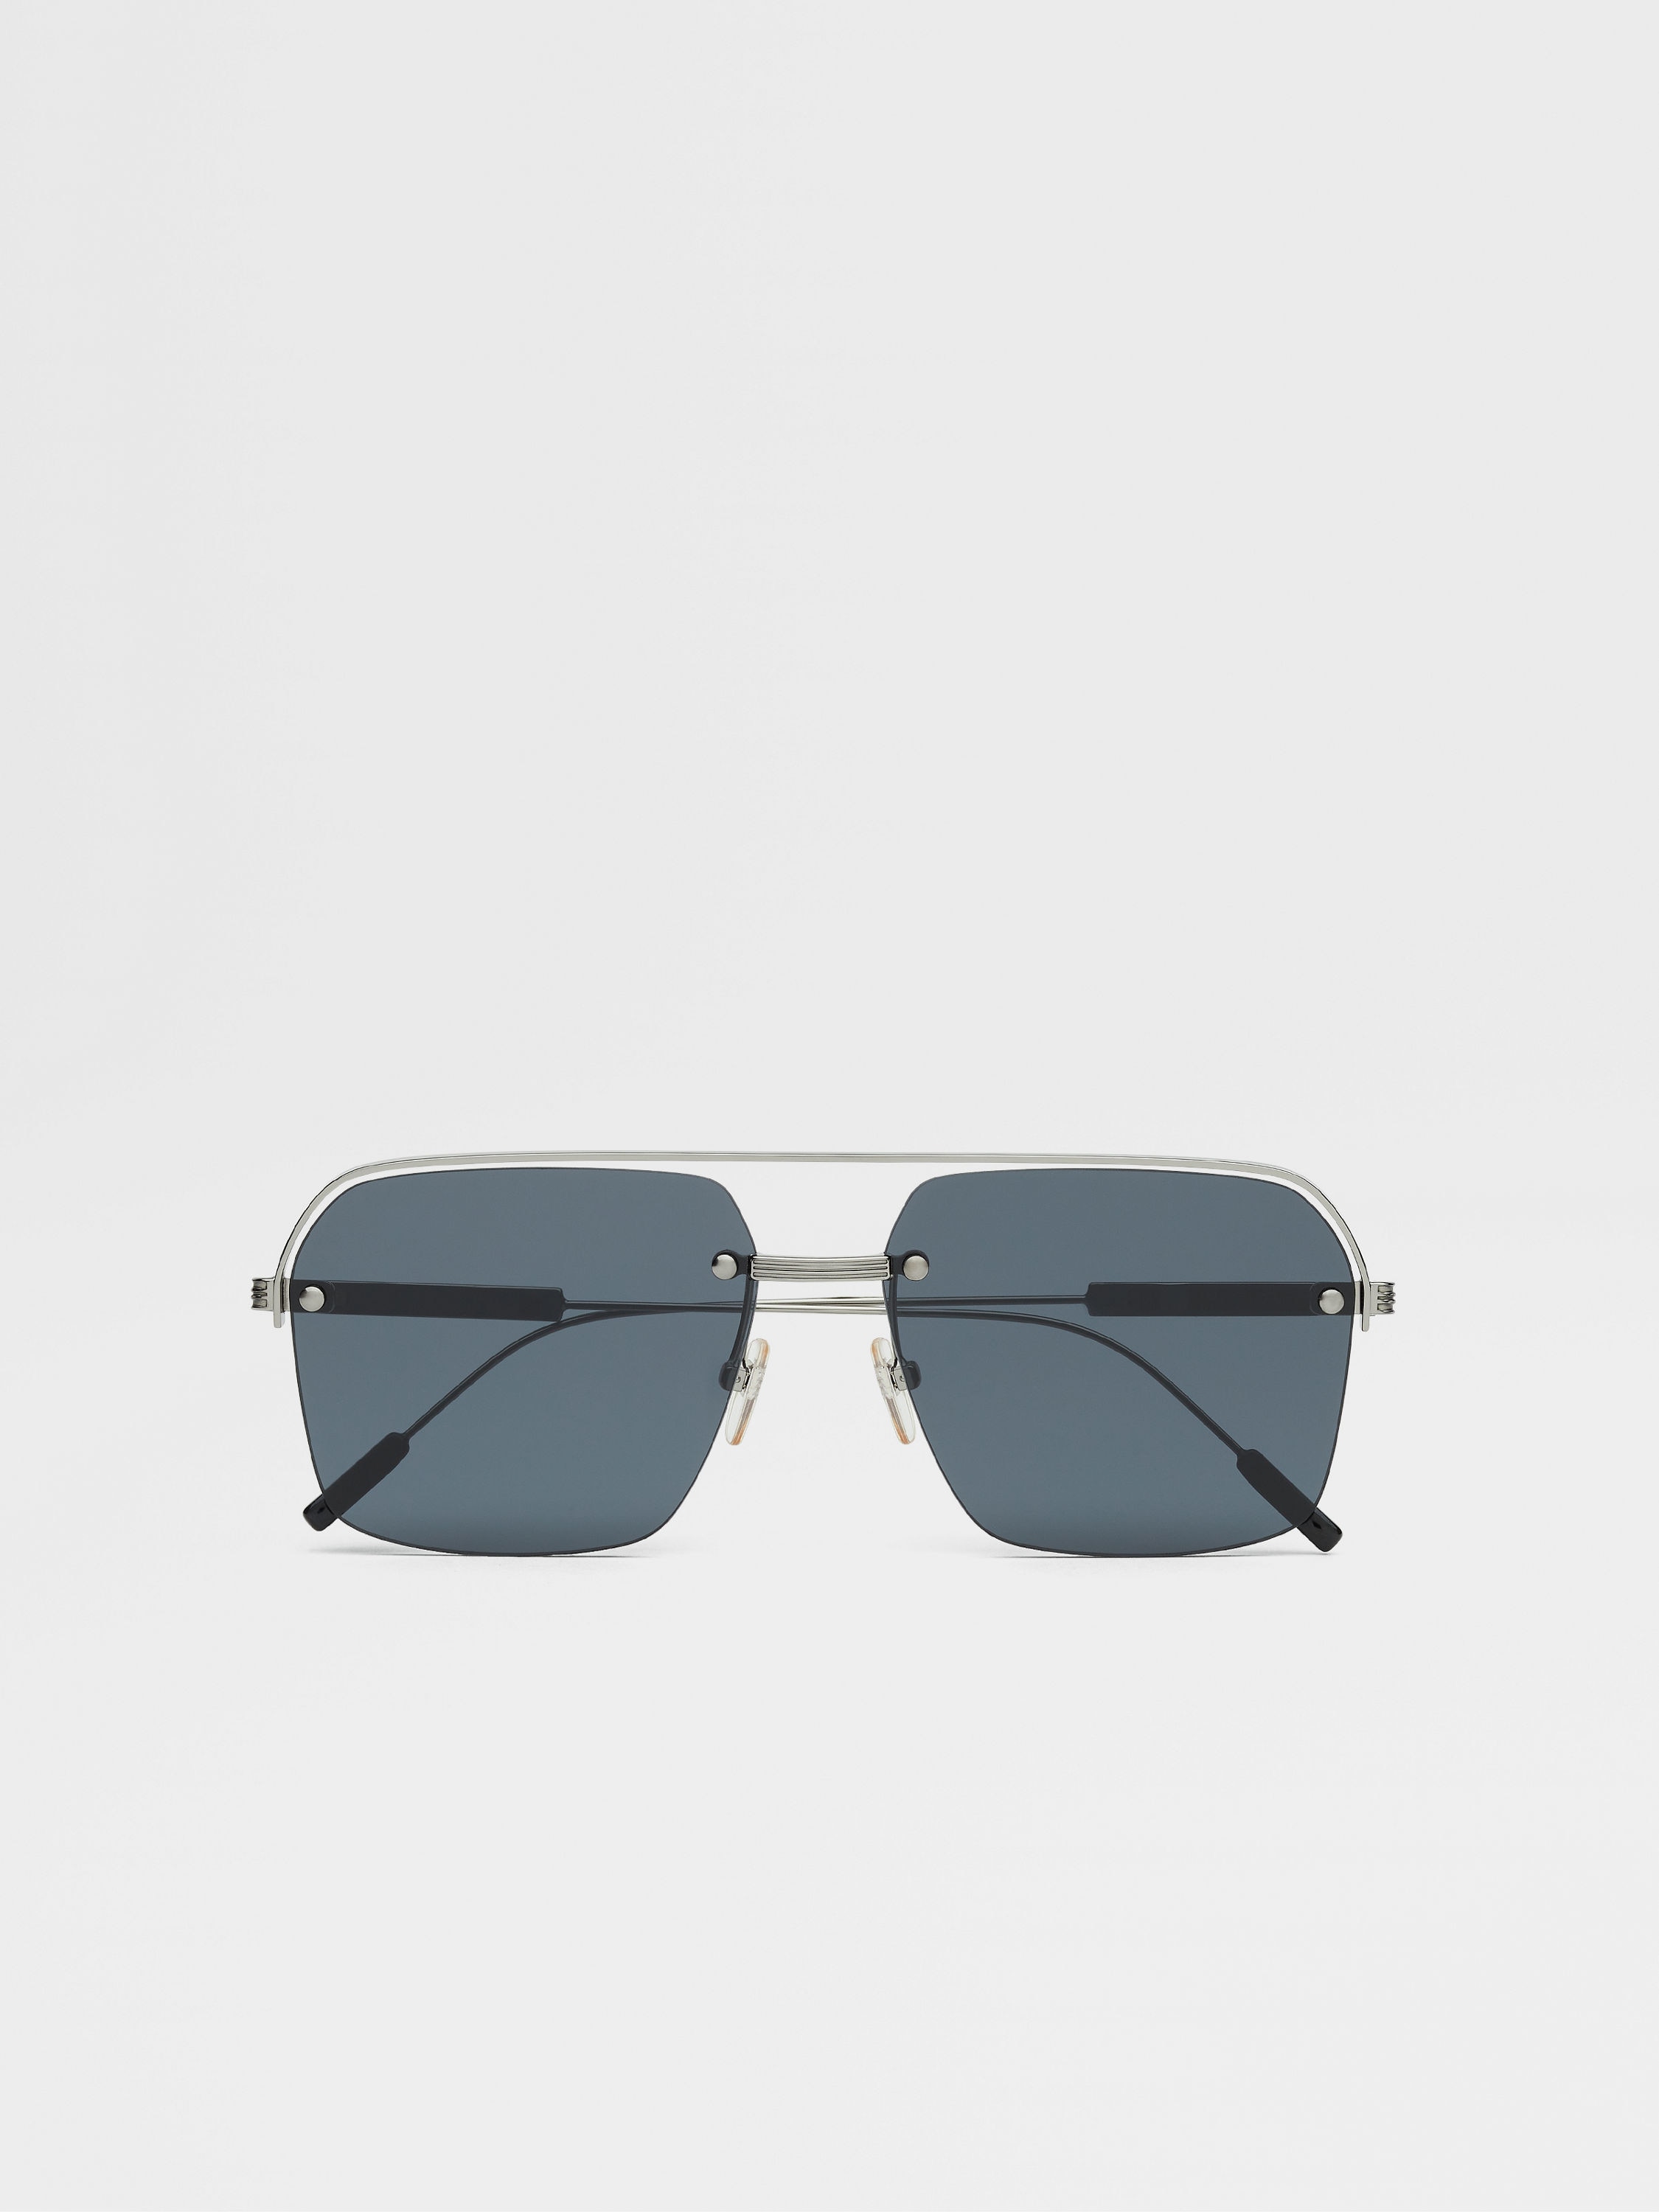 Shiny Gunmetal Metal Sunglasses